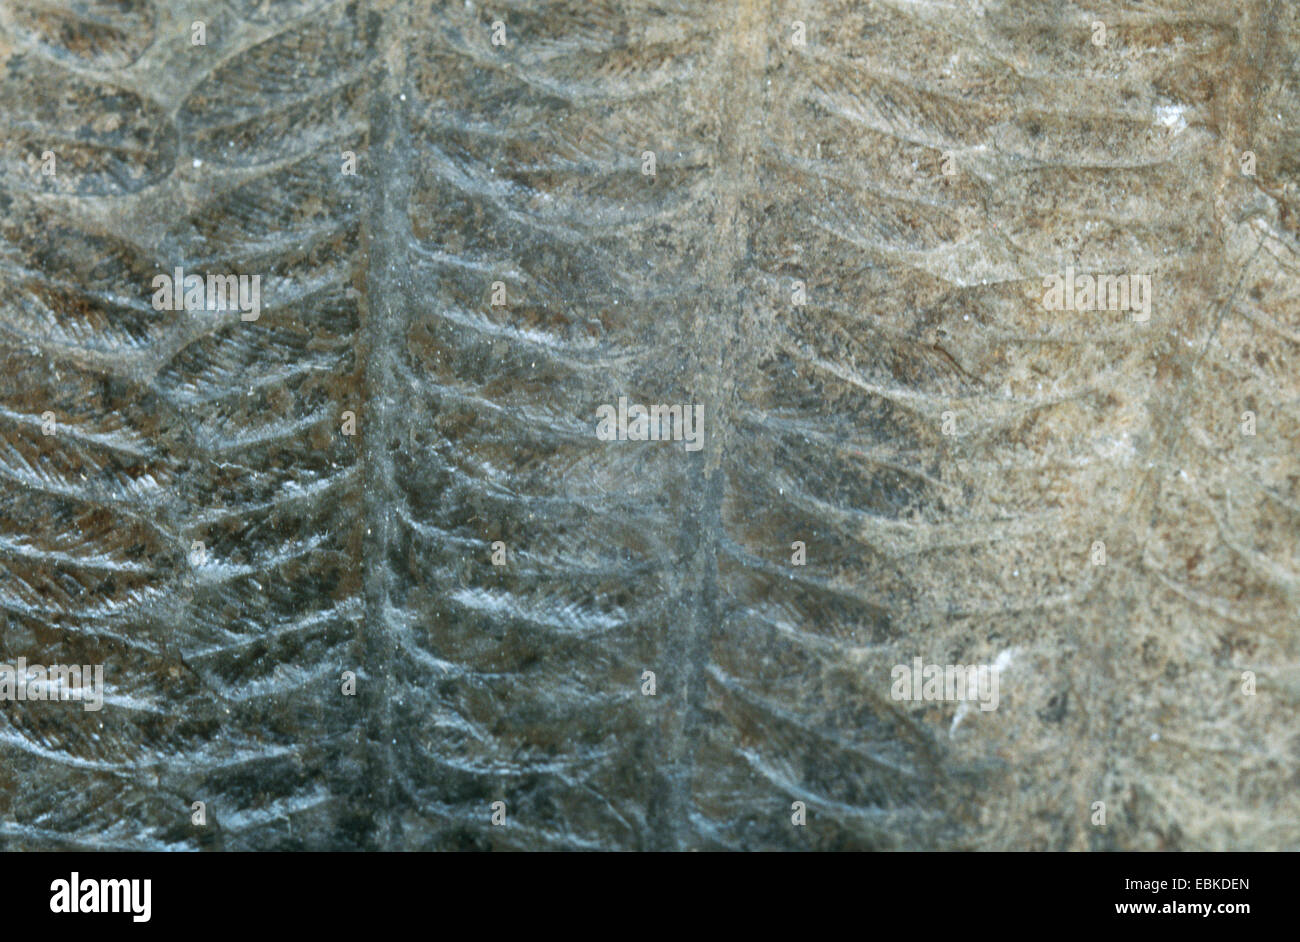 Callipteris conferta, fossil seed fern, Rotliegend, Lower Silesia Stock Photo